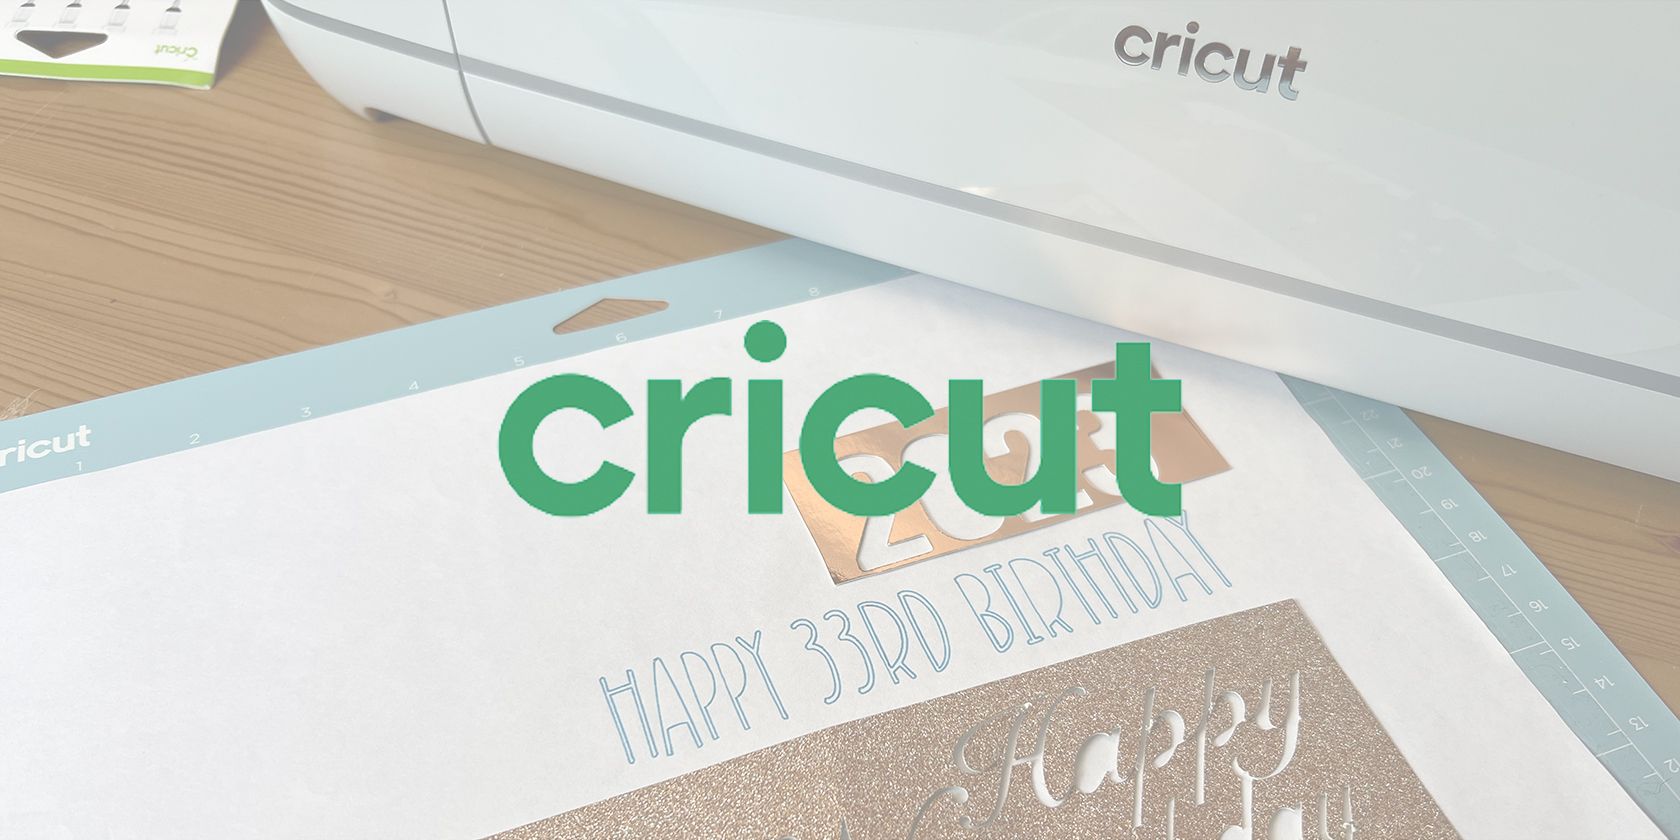 Cricut logo overlaid on Cricut cutting mat and machine.